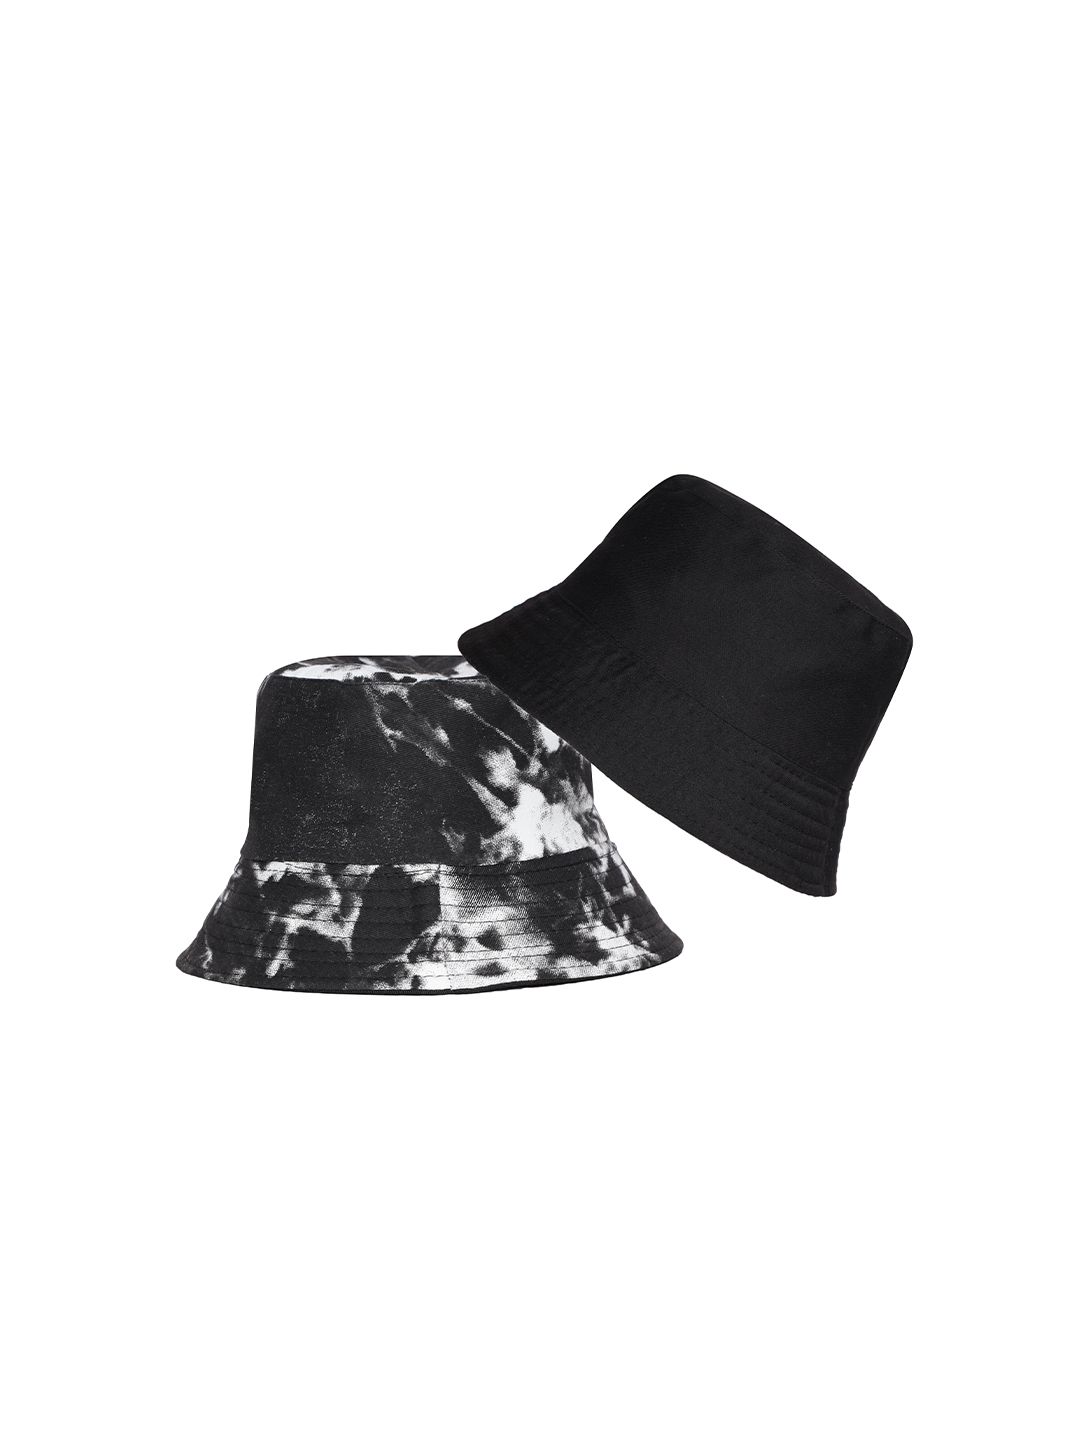 FabSeasons Unisex Black & White Reversible Bucket Hat Price in India